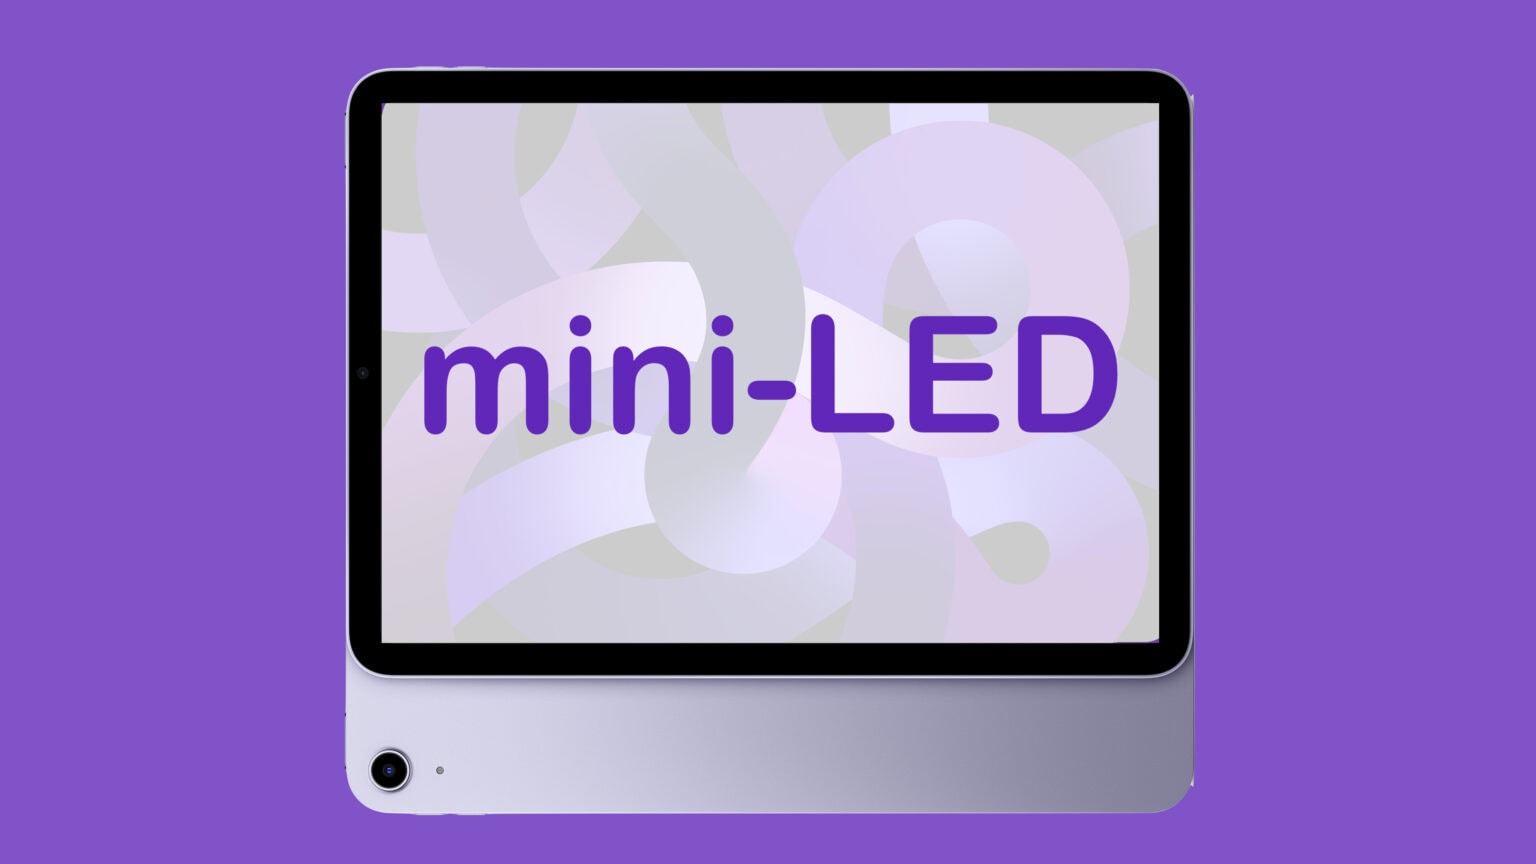 12.9-inch iPad Air with mini-LED display